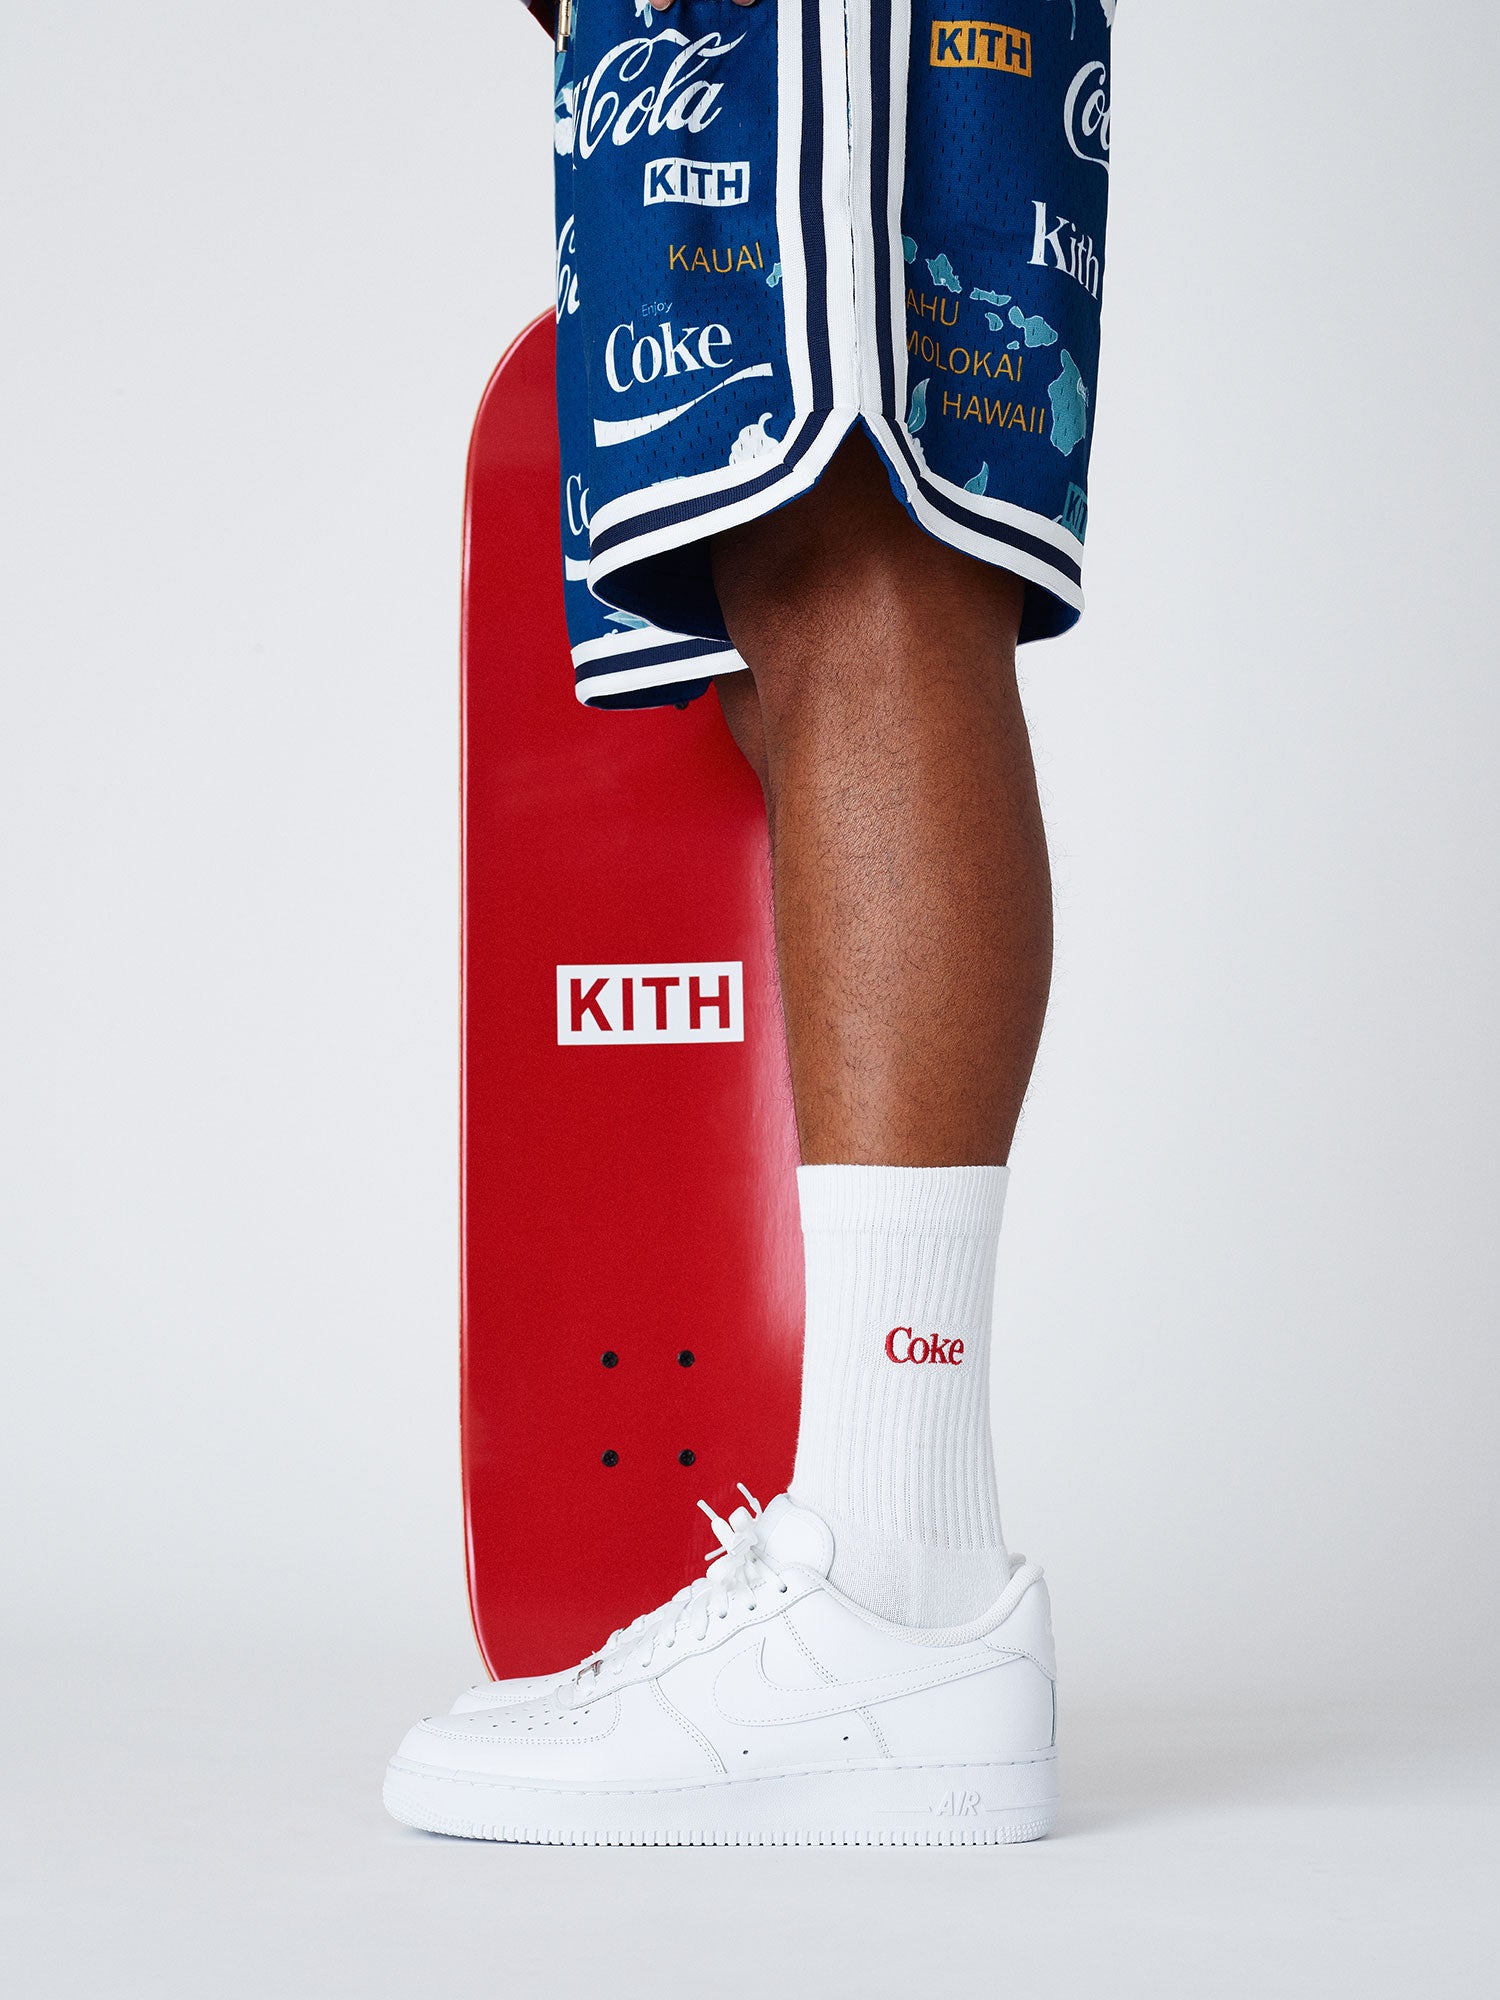 Kith x Coca Cola Season 4 Lookbook